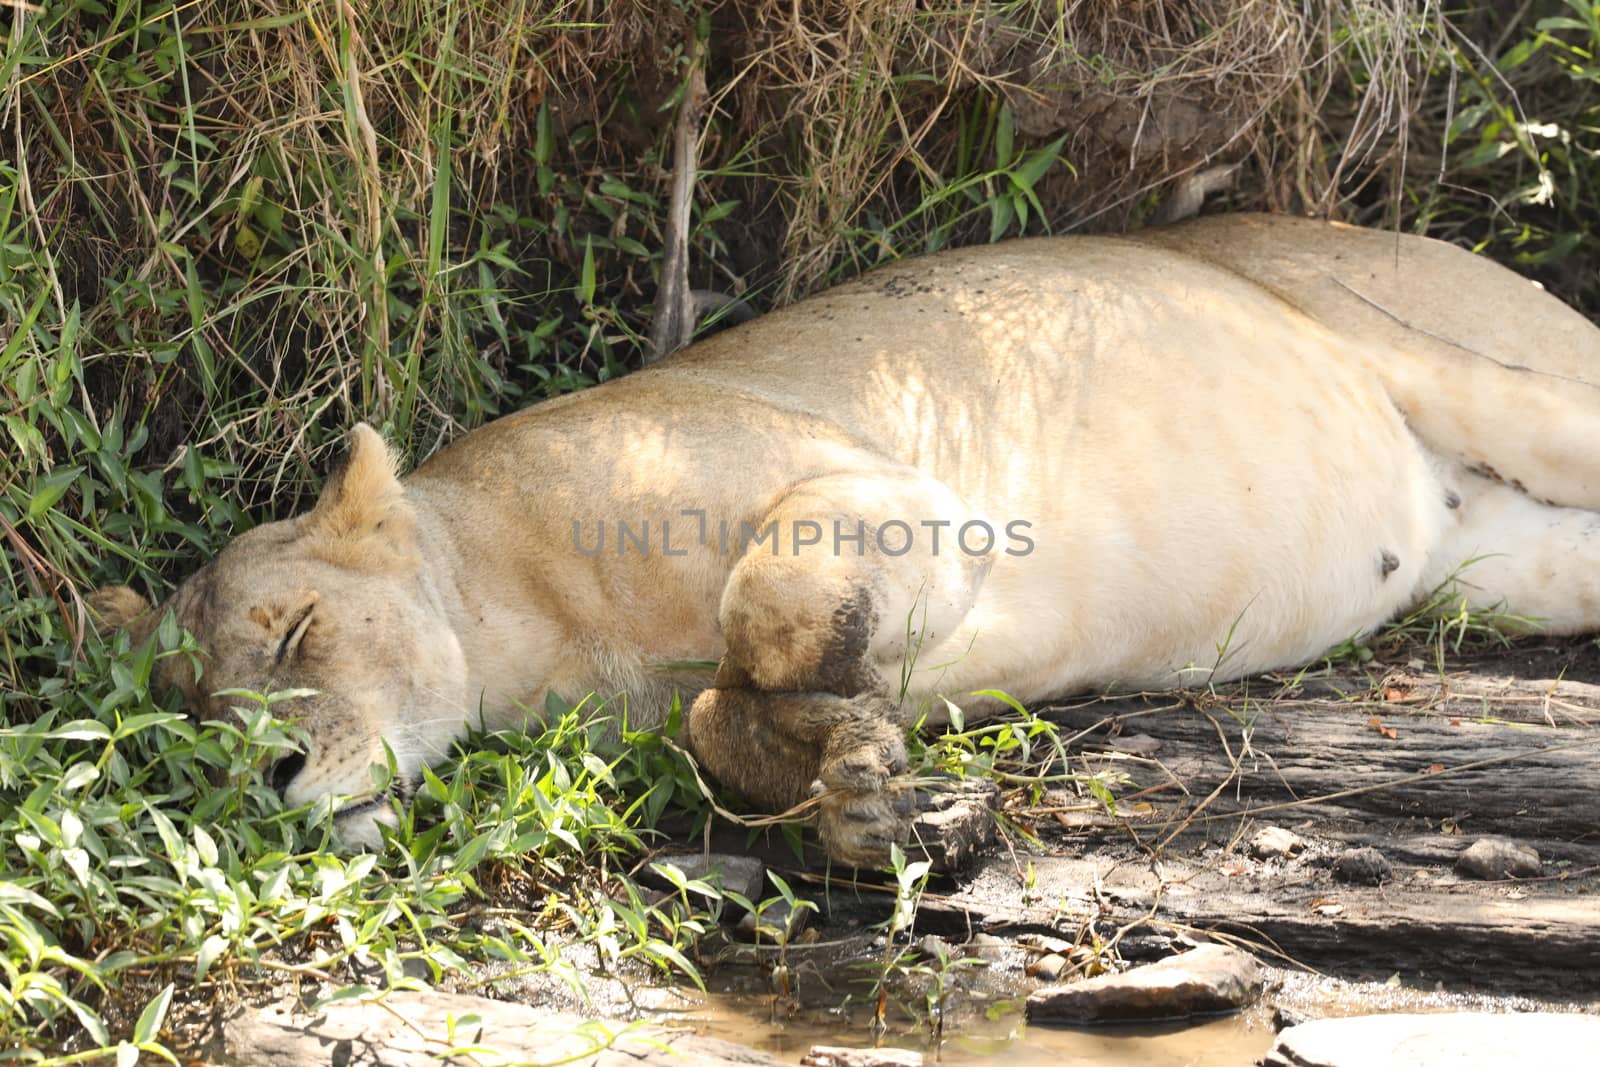 Lion Masai Mara Kenya Africa